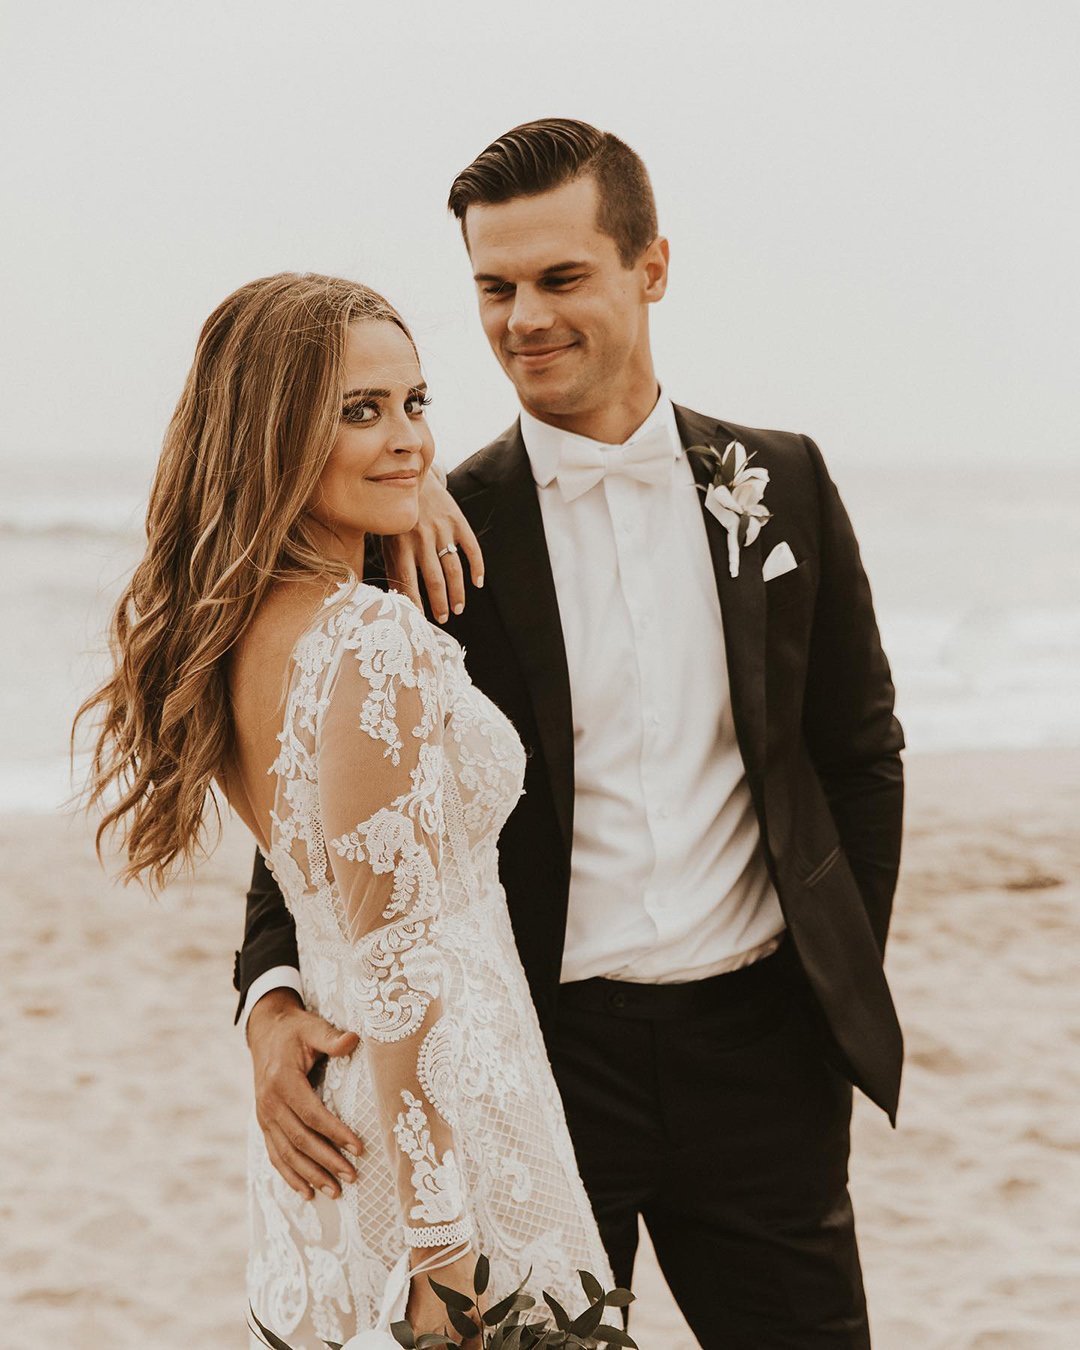 mens wedding attire black jacket with bow tie beach thiswildromancephoto